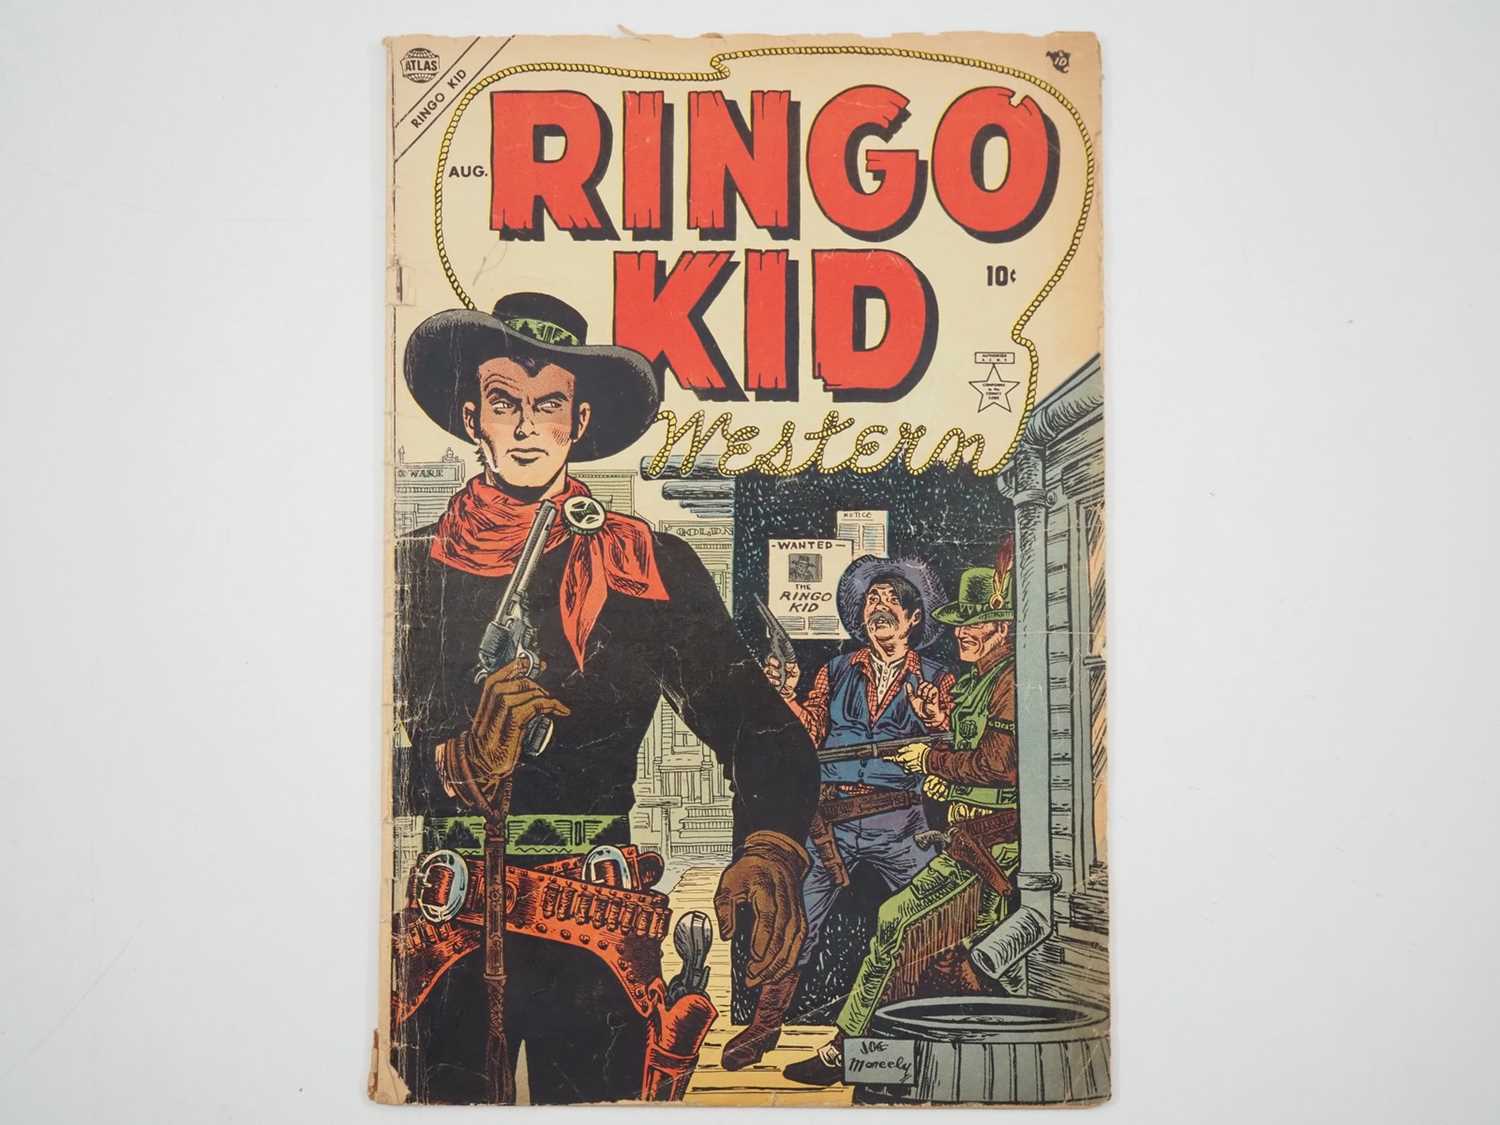 RINGO KID WESTERN #1 (1954 - ATLAS) - Includes Cover art by Joe Maneely - Flat/Unfolded - a detailed